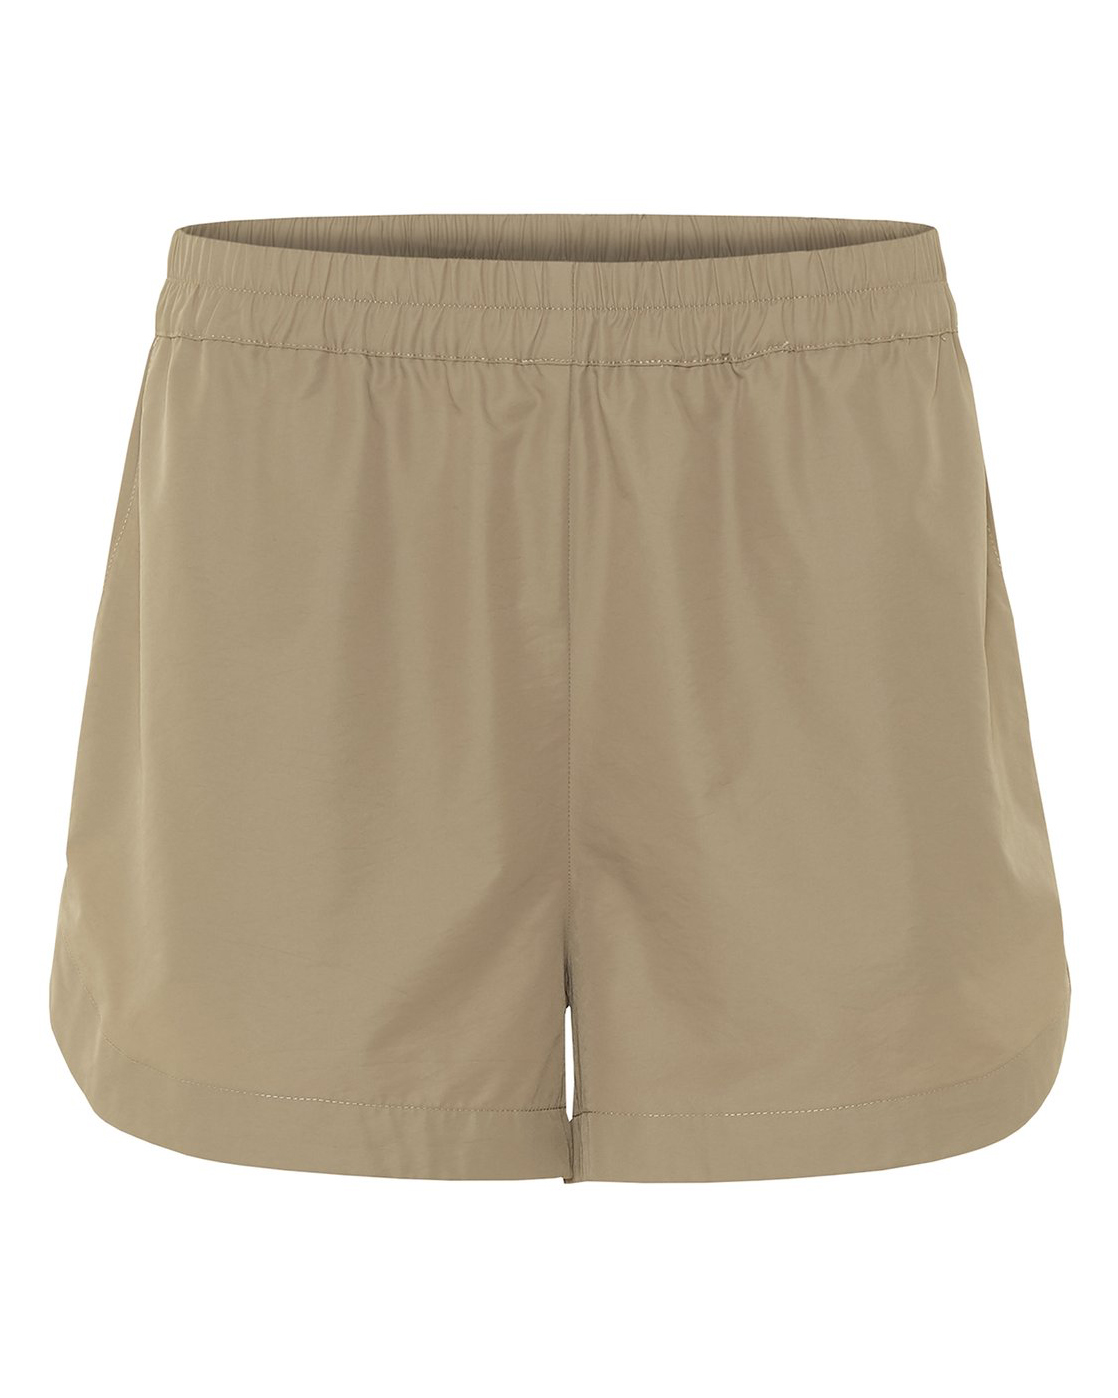 Coras shorts - Light brown